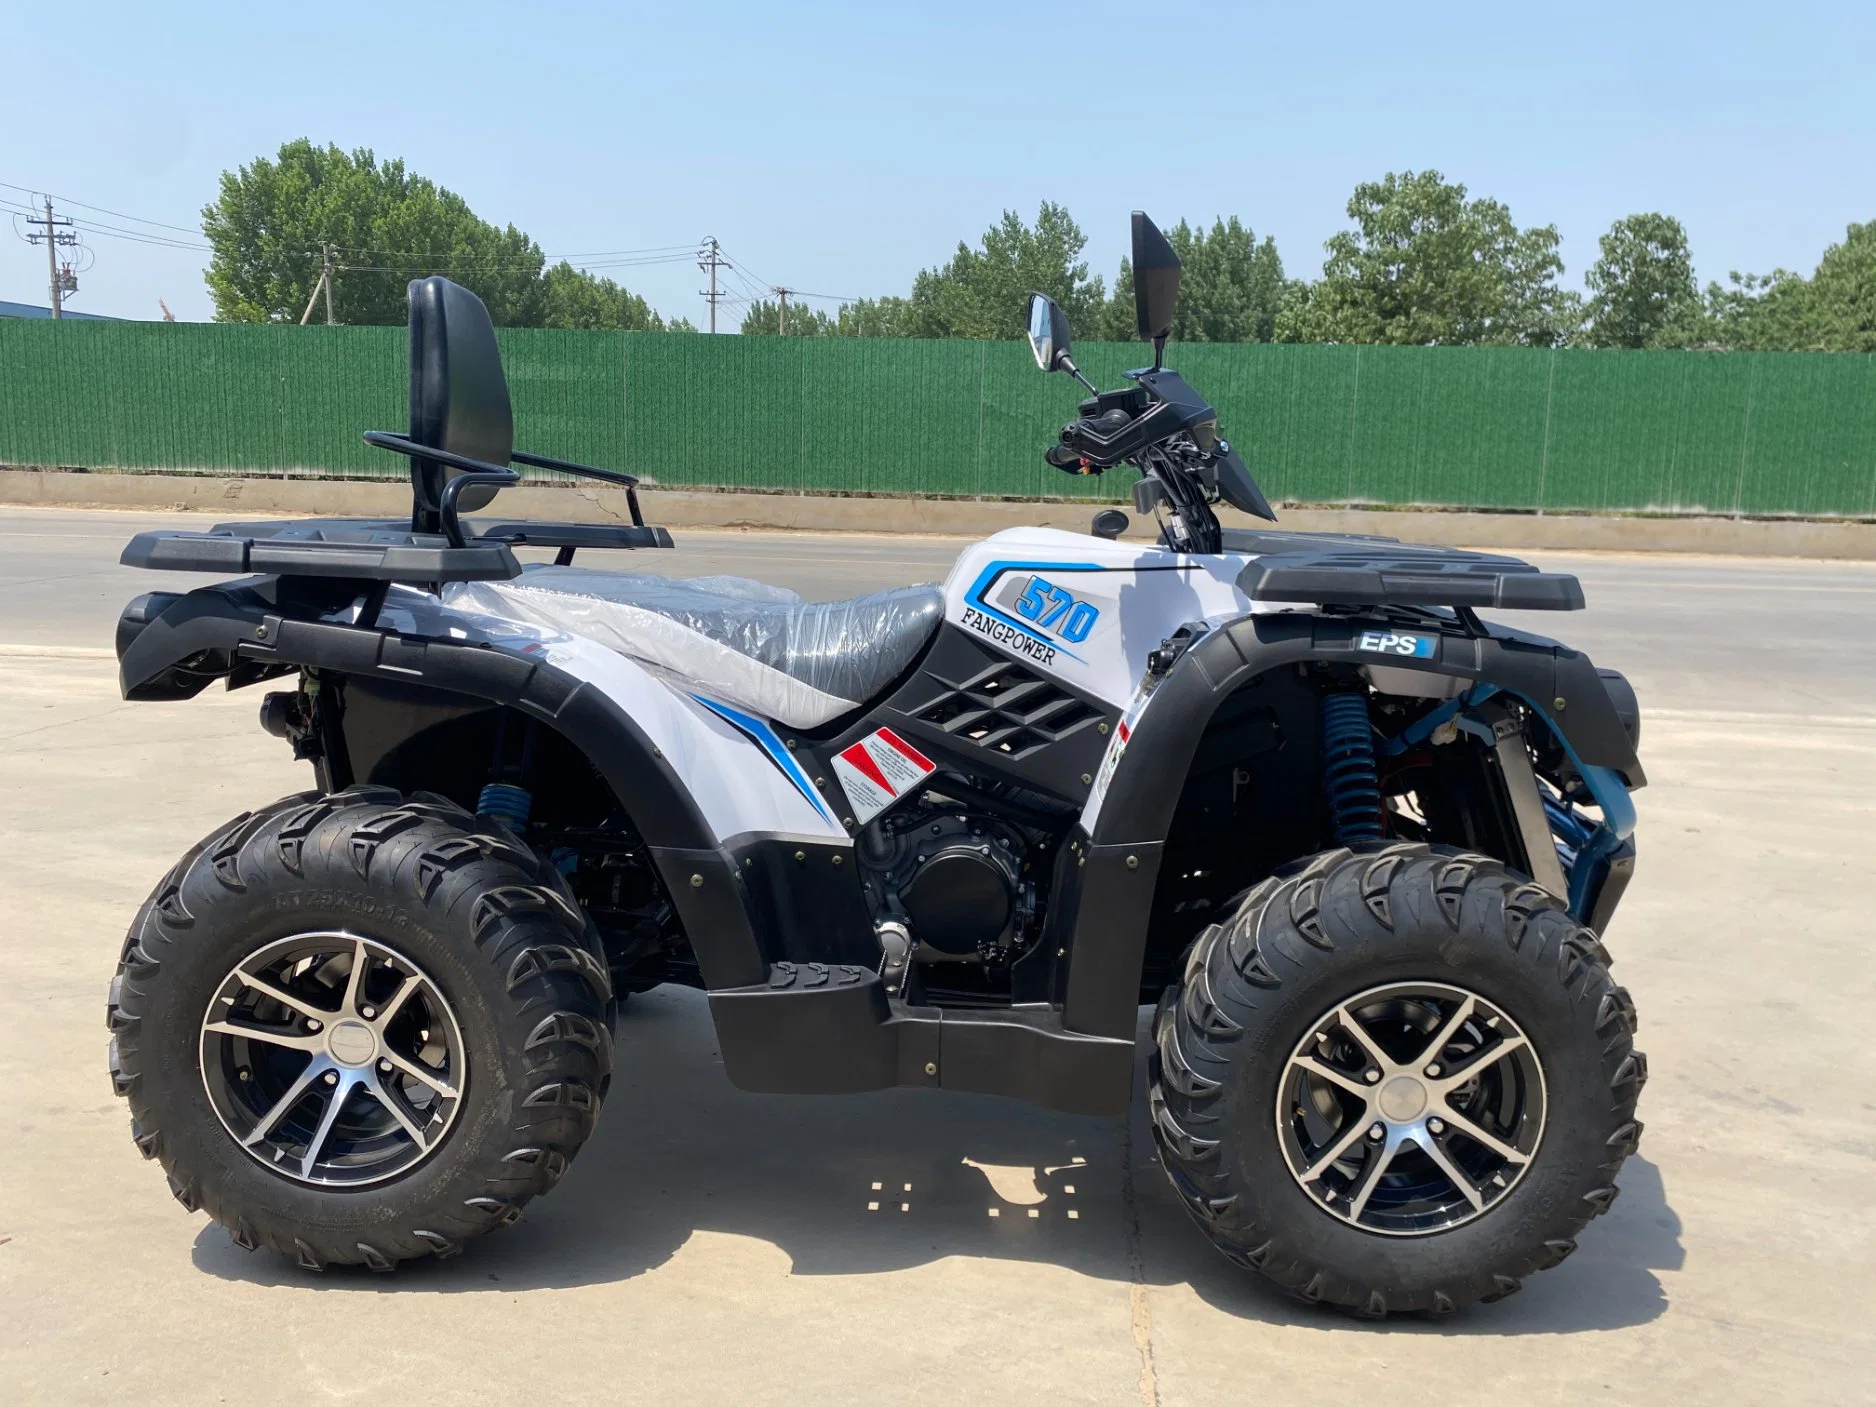 Fangpower 570cc ATV 4X4 ATV Road Legal Gasoline ATV with EPA